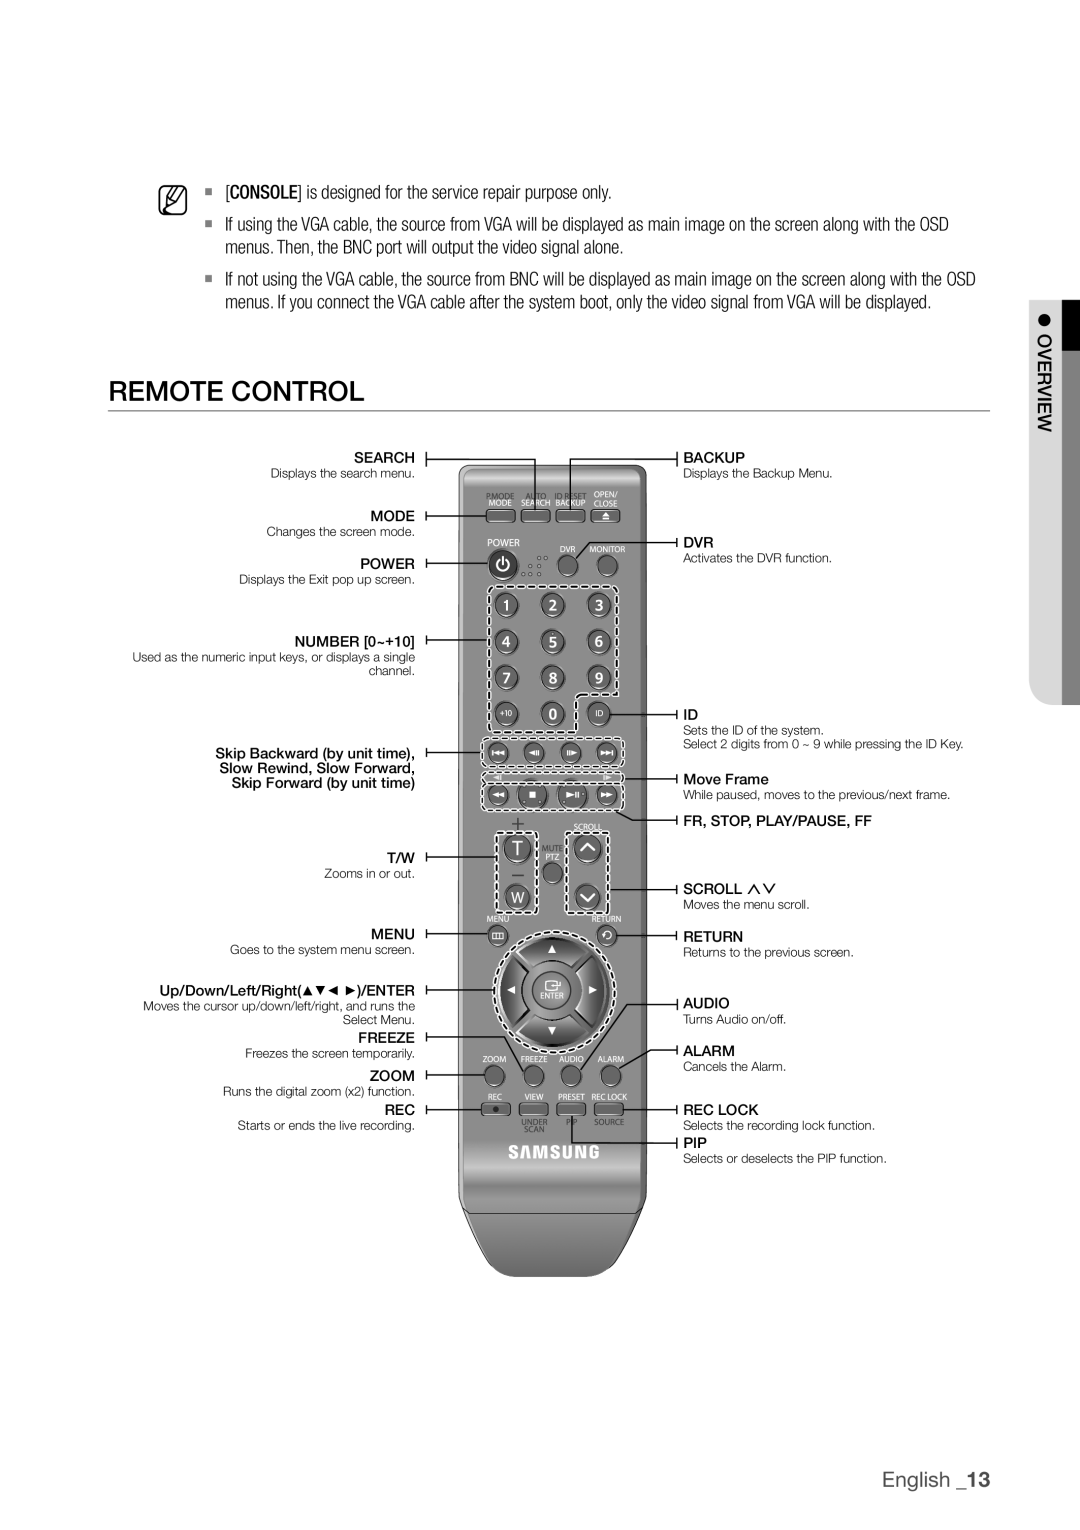 Samsung SDR3100 user manual Remote Control, English _13 